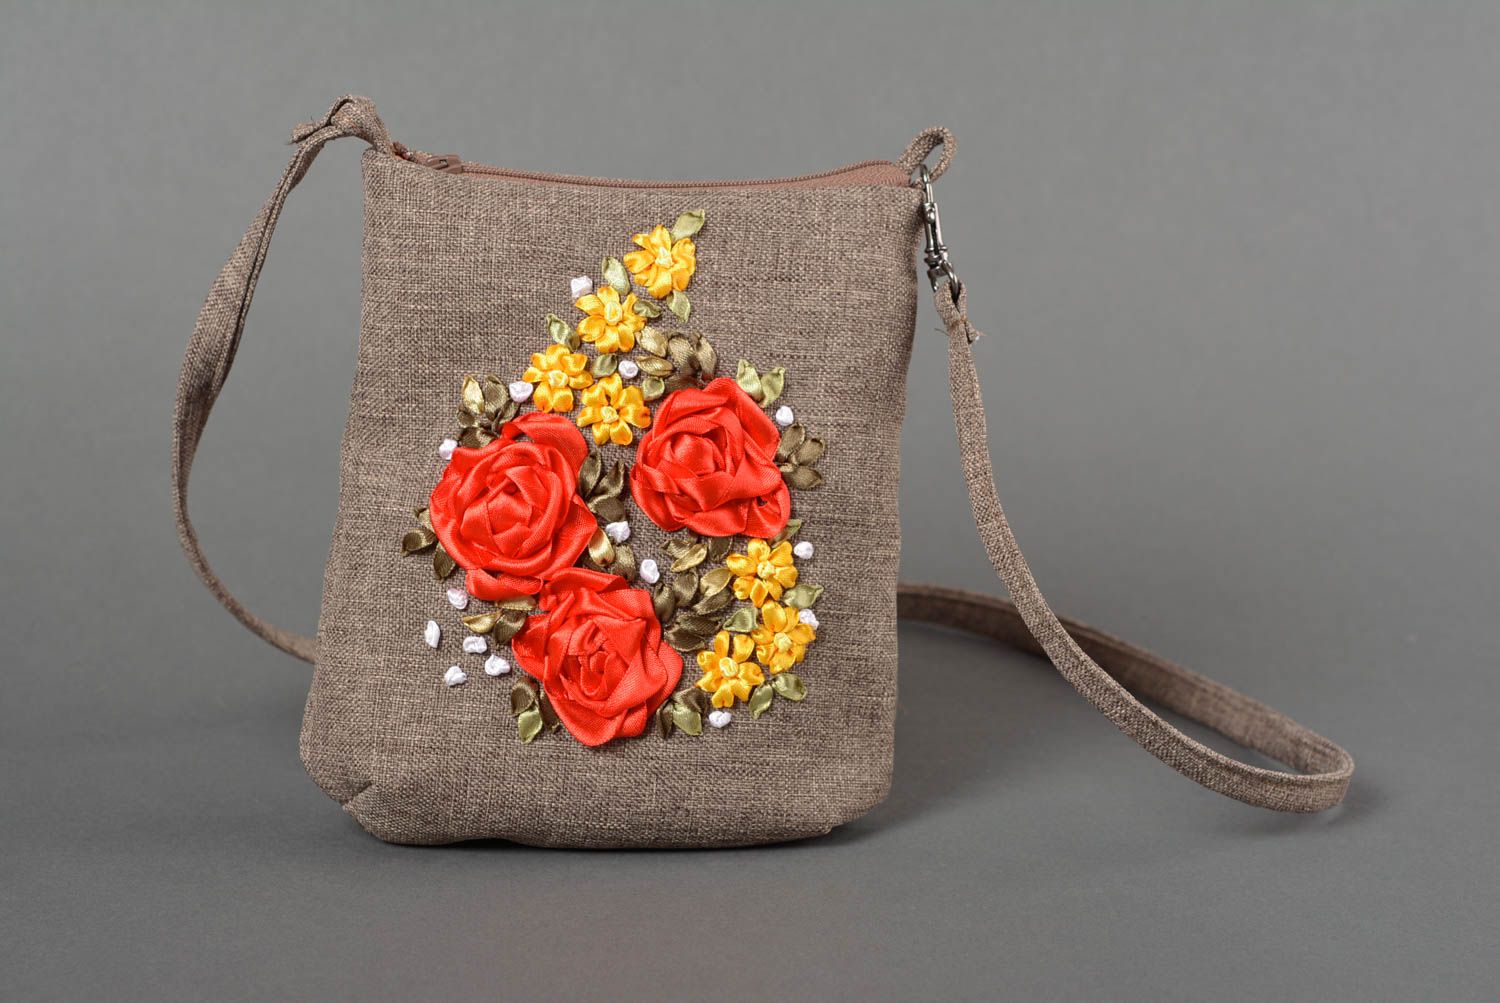 Handmade bag fabric bag gift ideas bag for women designer unusual accessory photo 1